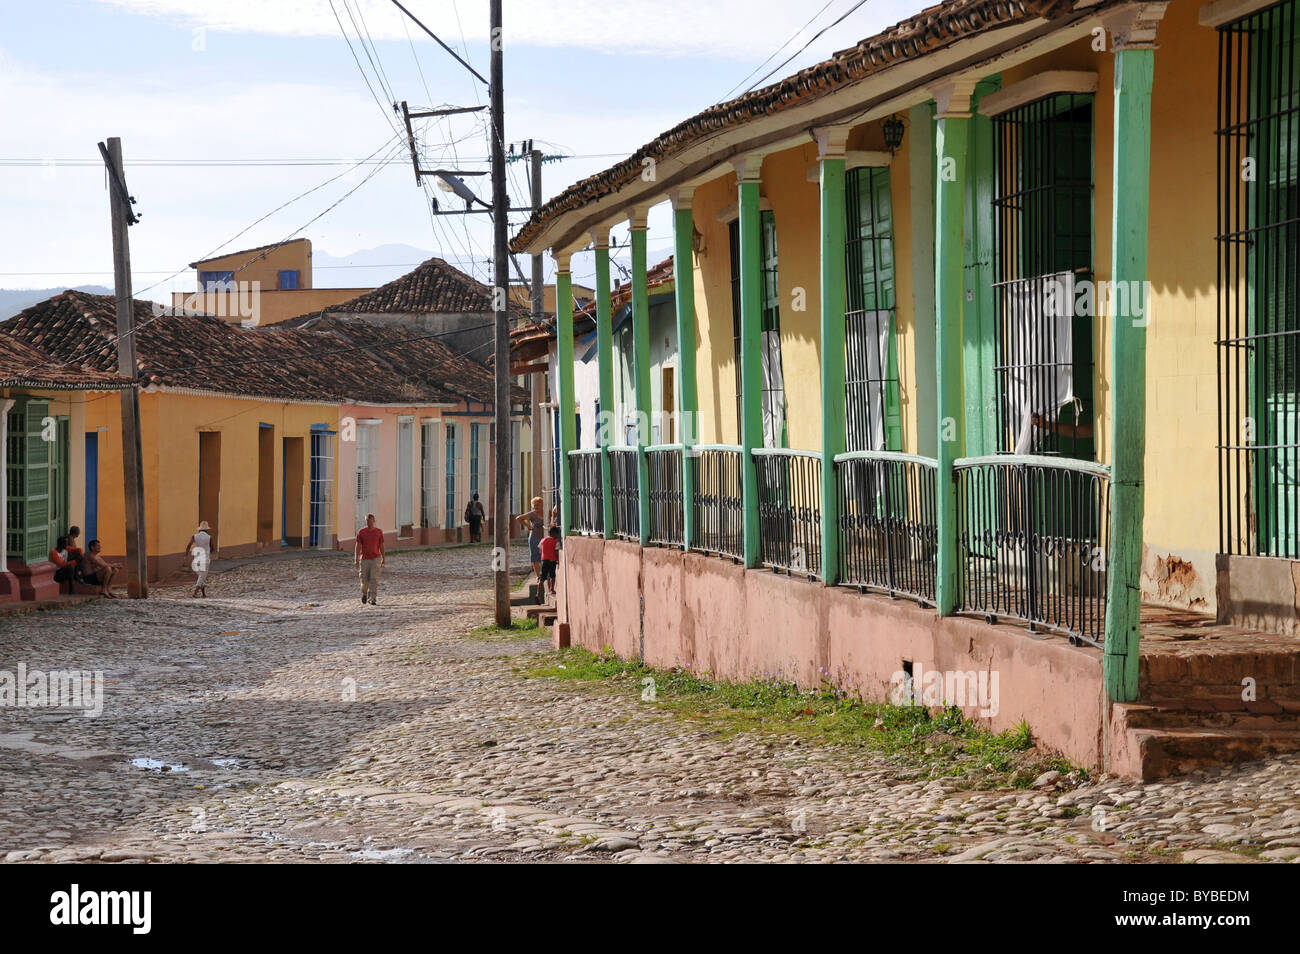 Alte Stadt, Trinidad, Kuba, Karibik, Mittelamerika Stockfoto